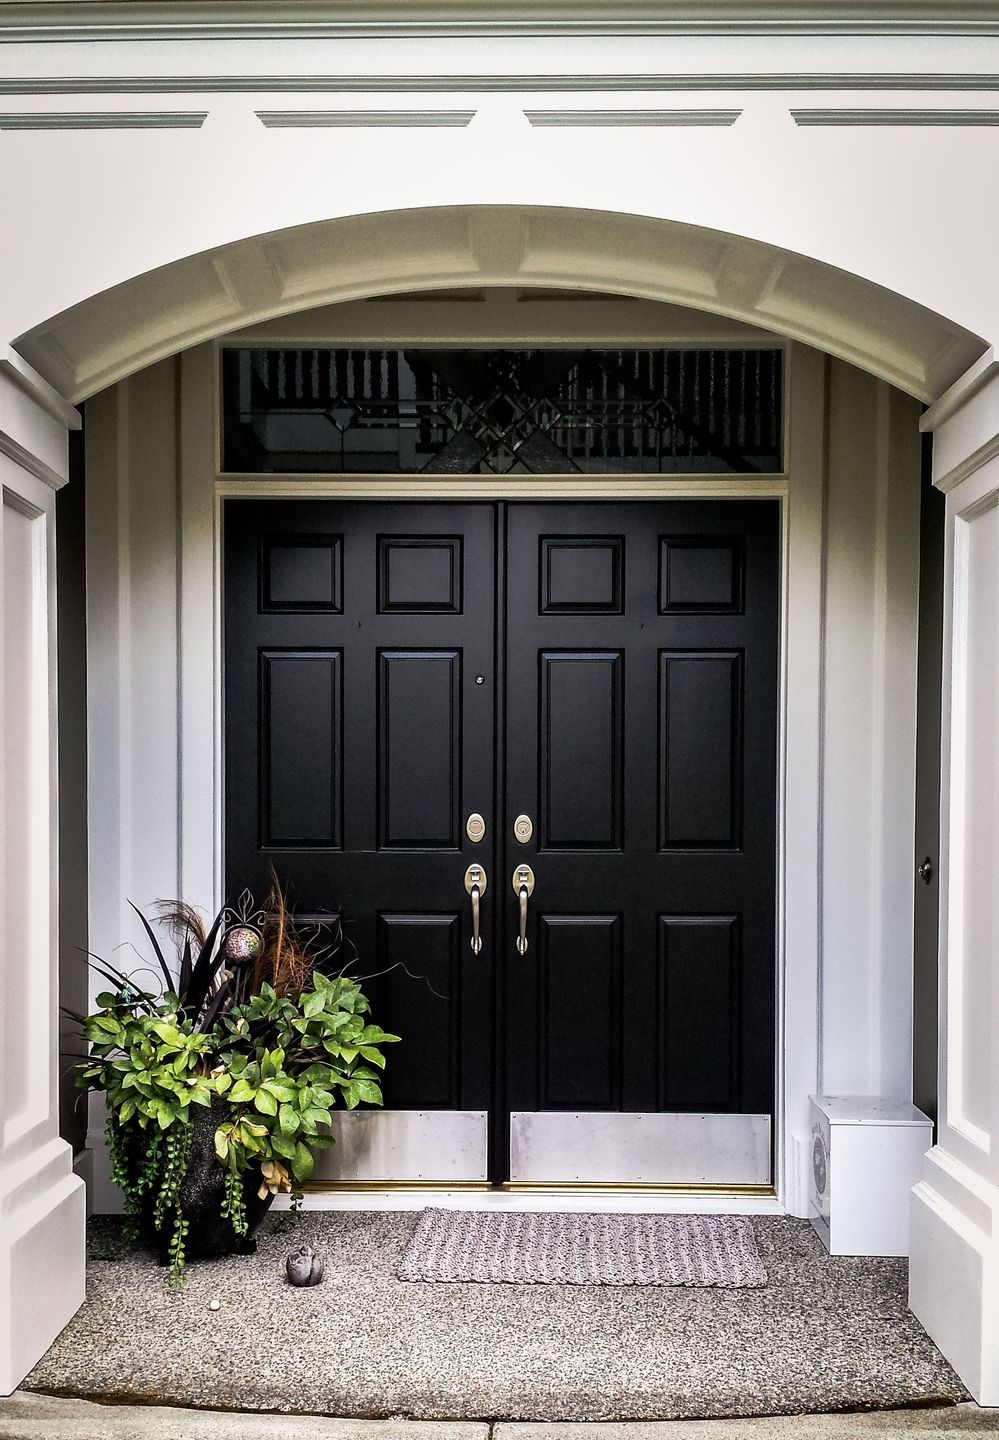 Konsep monokrom sangat mudah dipadukan dengan berbagai warna pada pintu.